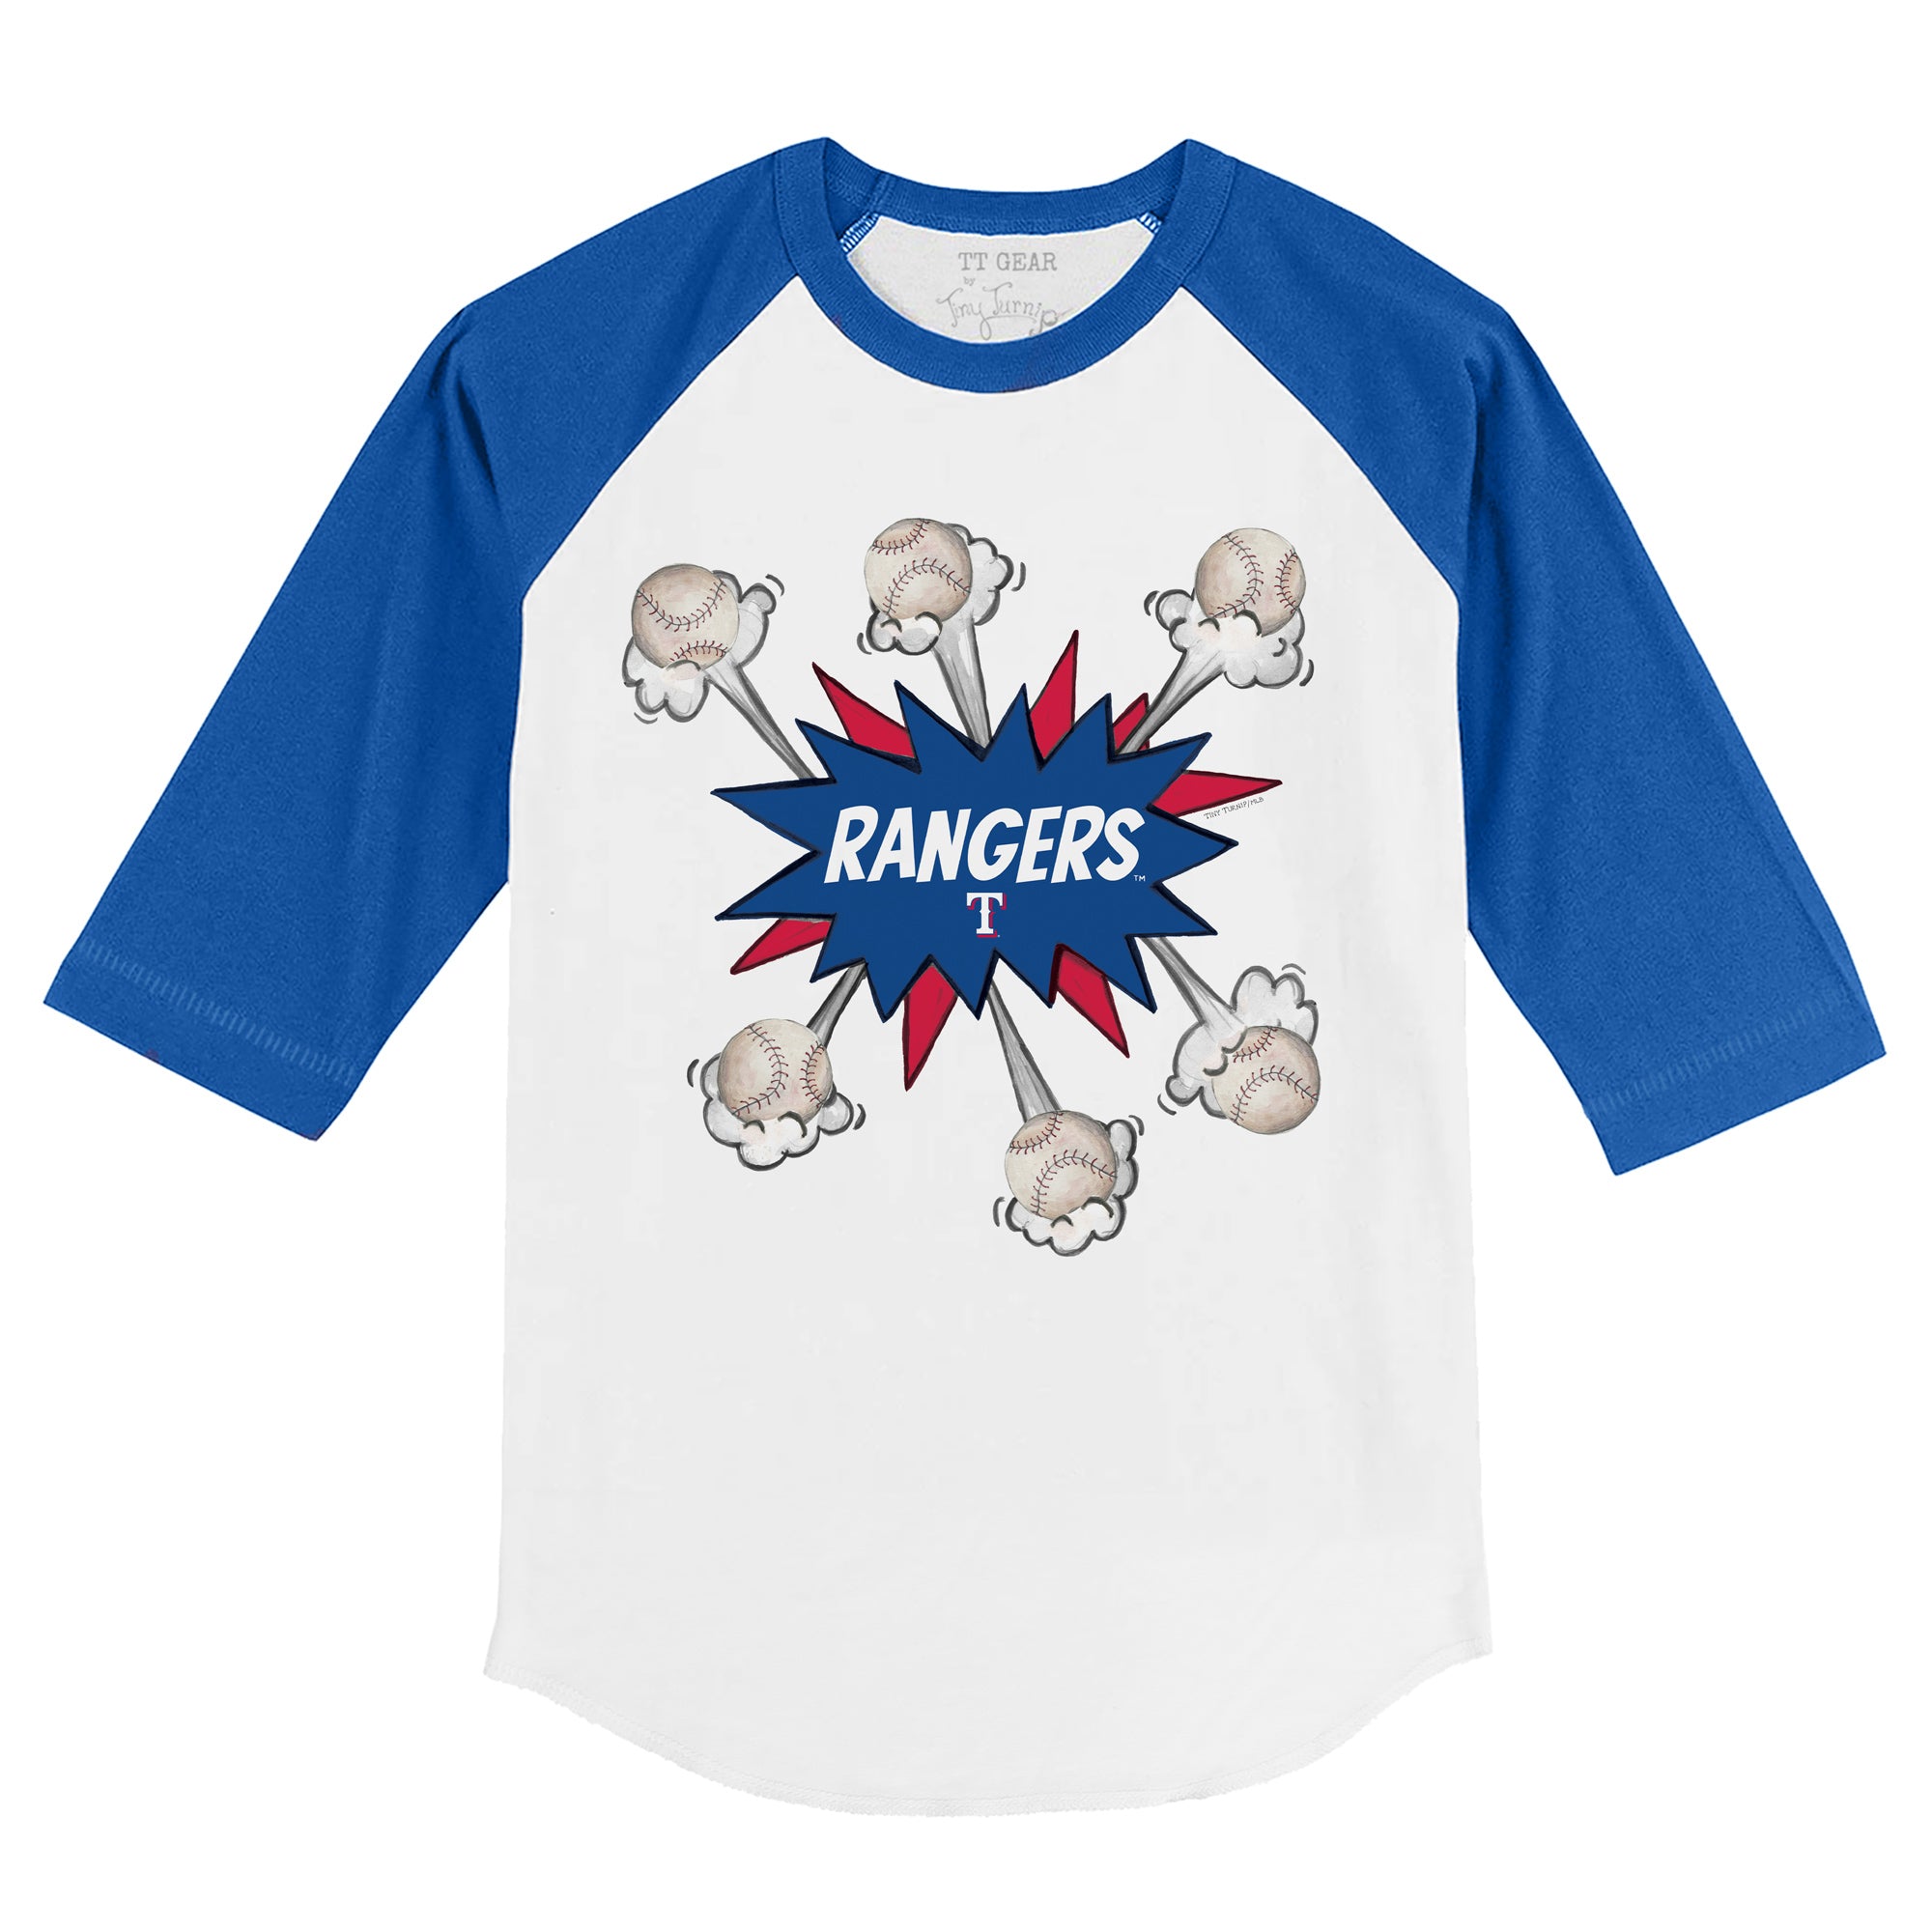 Toddler Tiny Turnip Royal Texas Rangers Baseball Love T-Shirt Size:3T